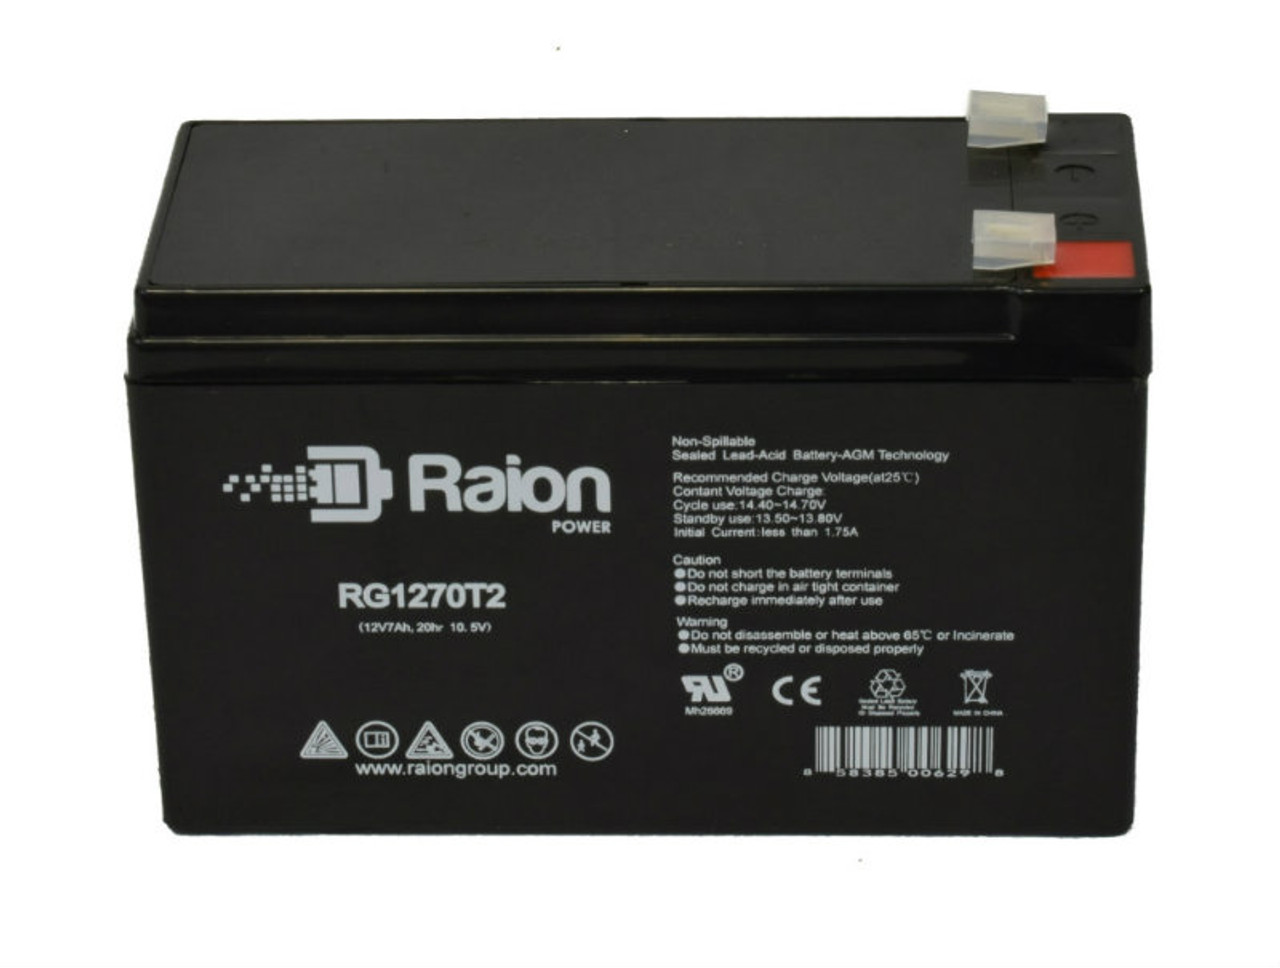 Raion Power RG1270T1 12V 7Ah Lead Acid Battery for ACME Security System